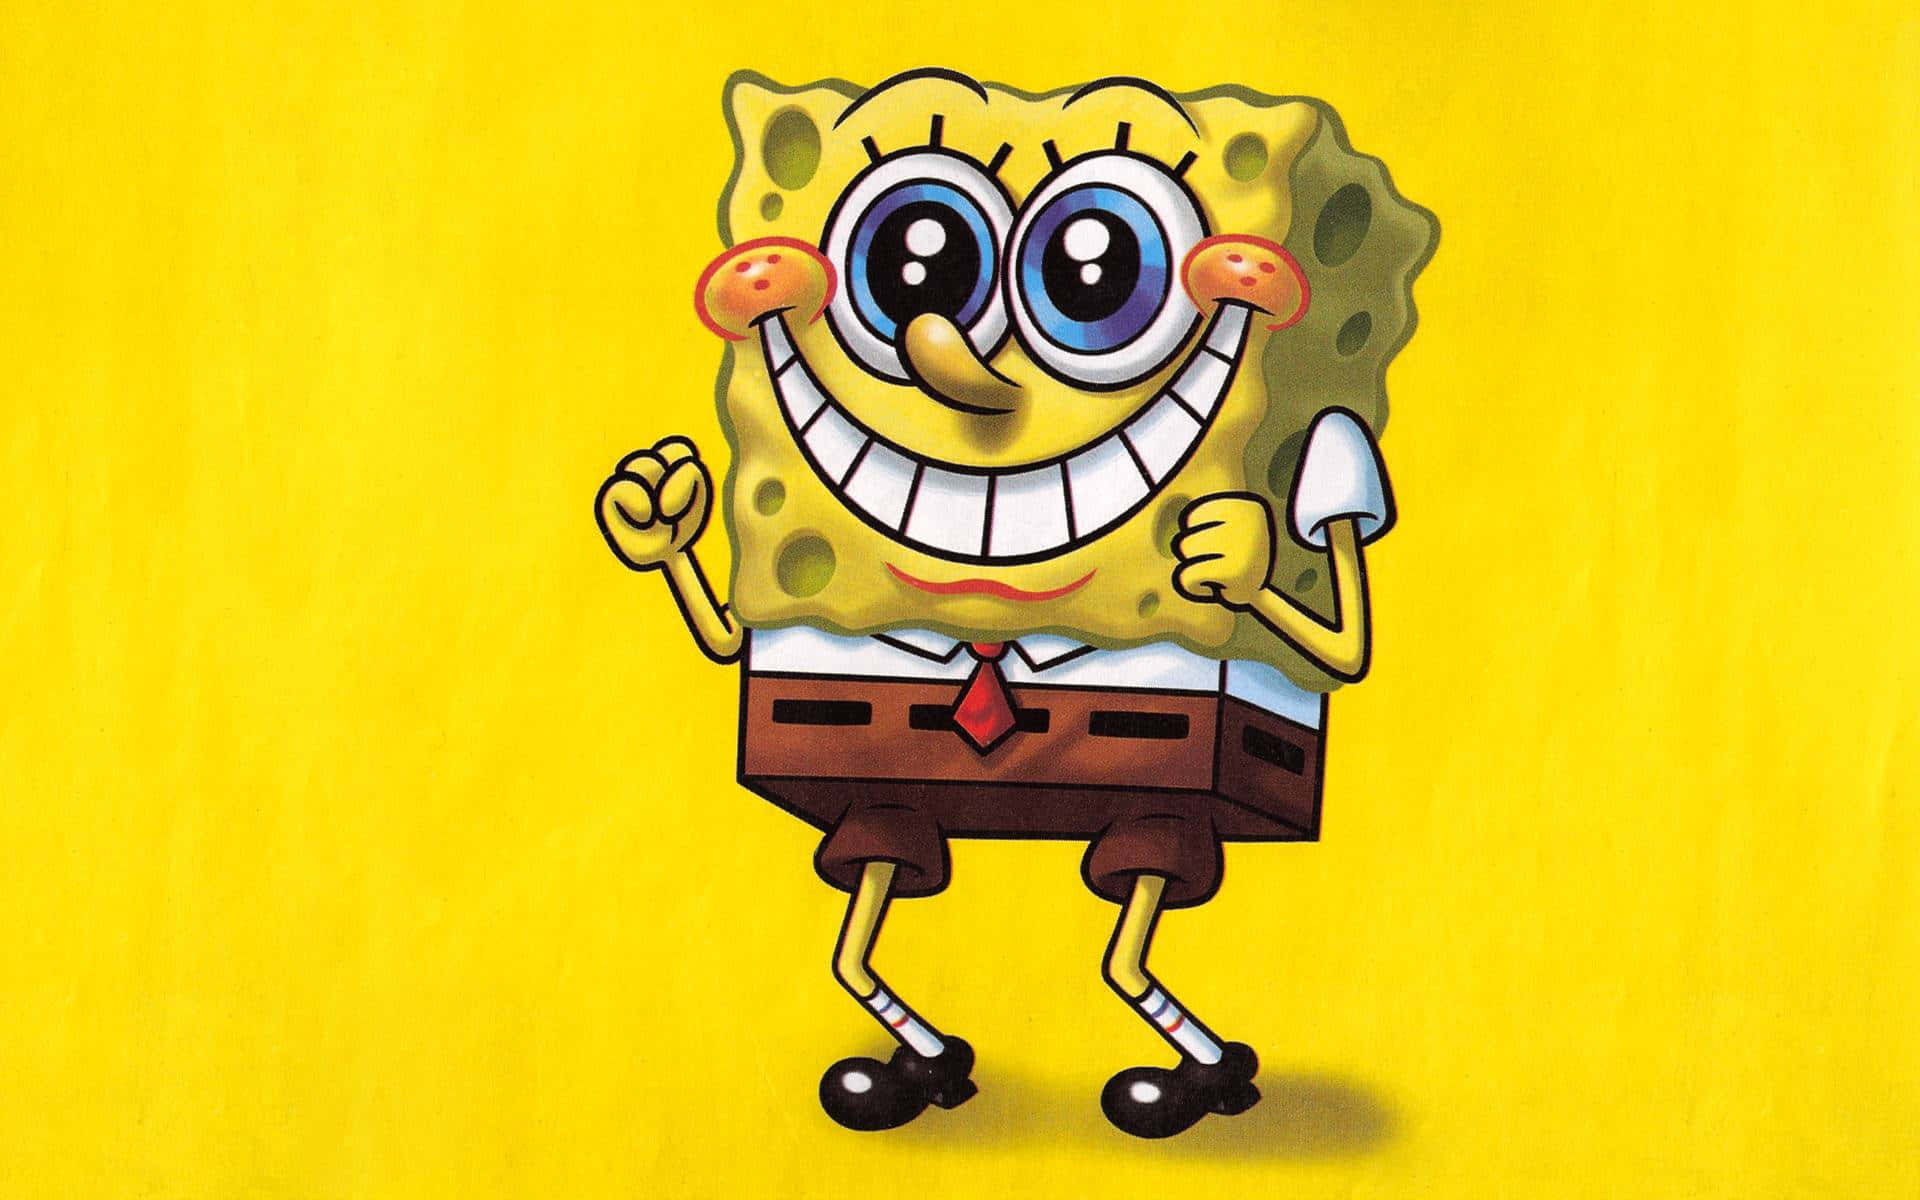 "Show me that Spongebob face!" Wallpaper